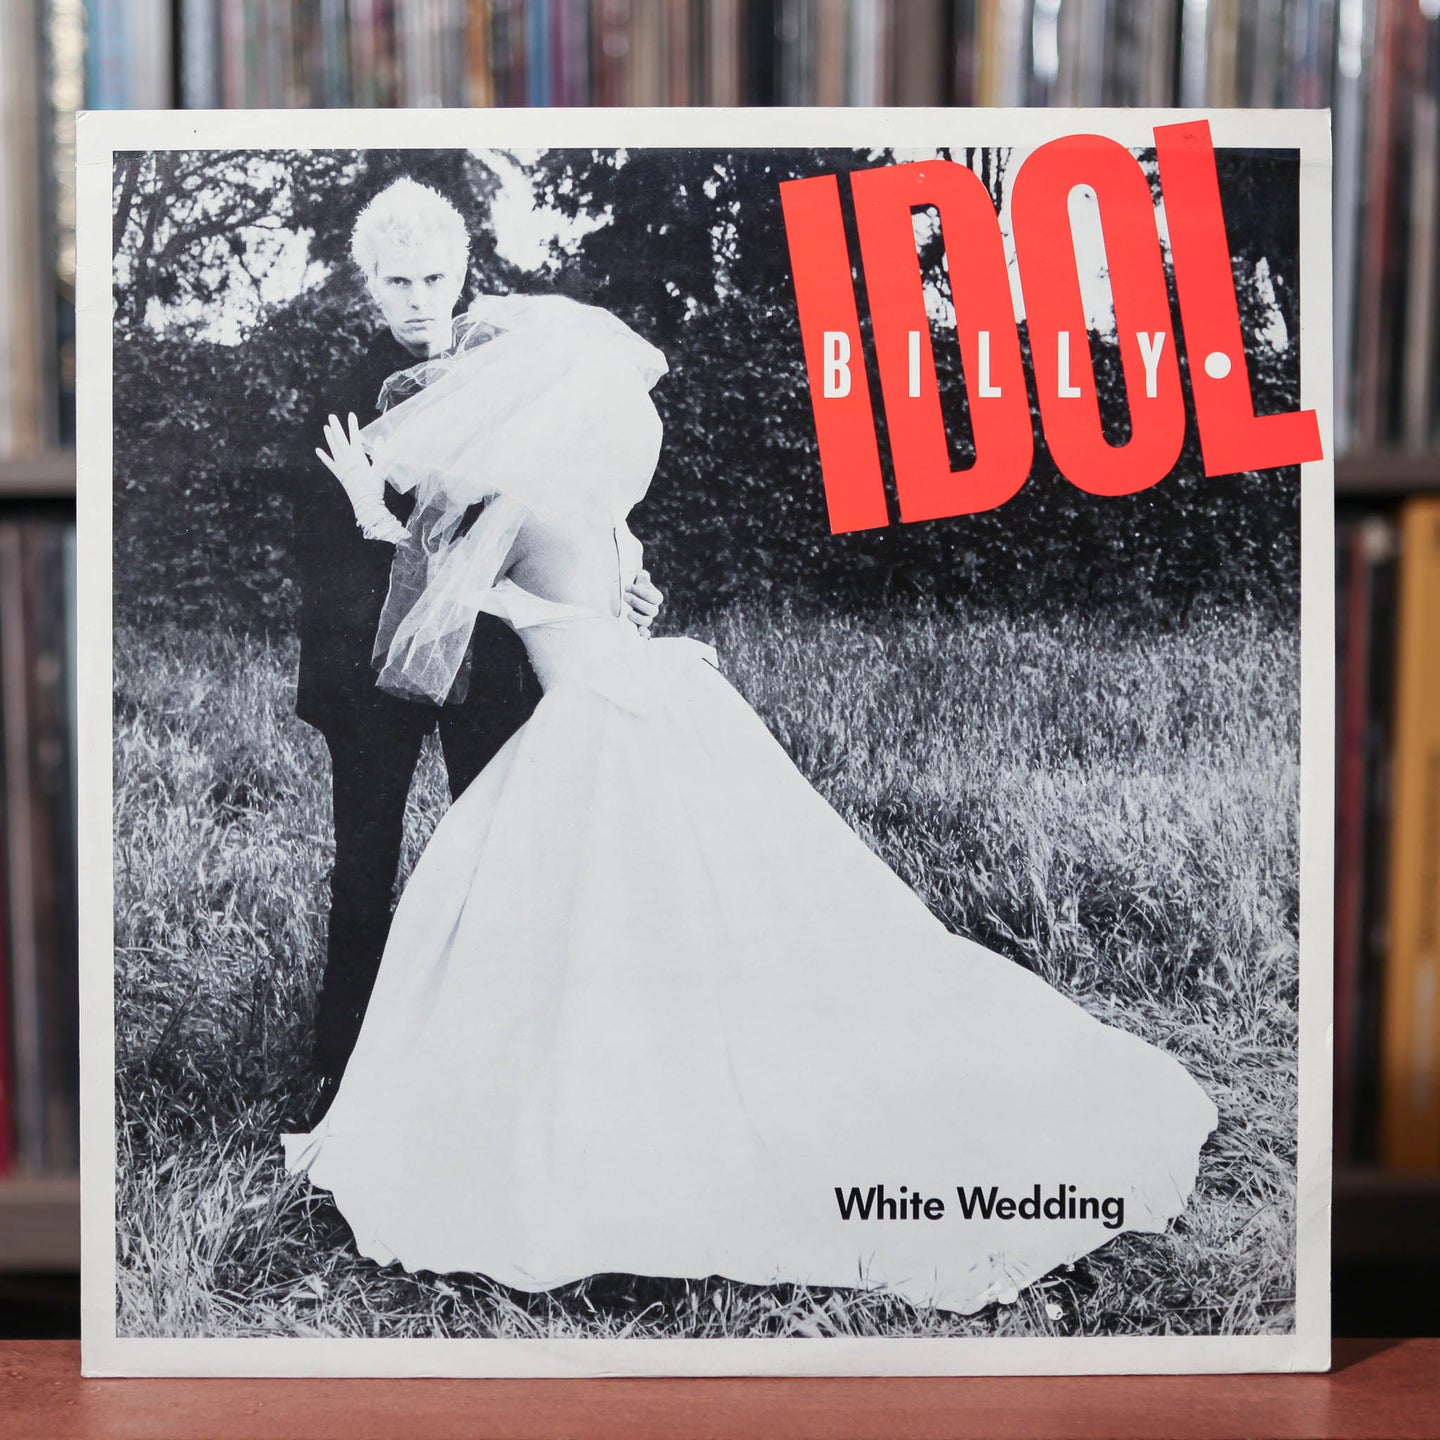 Billy Idol - White Wedding - 12